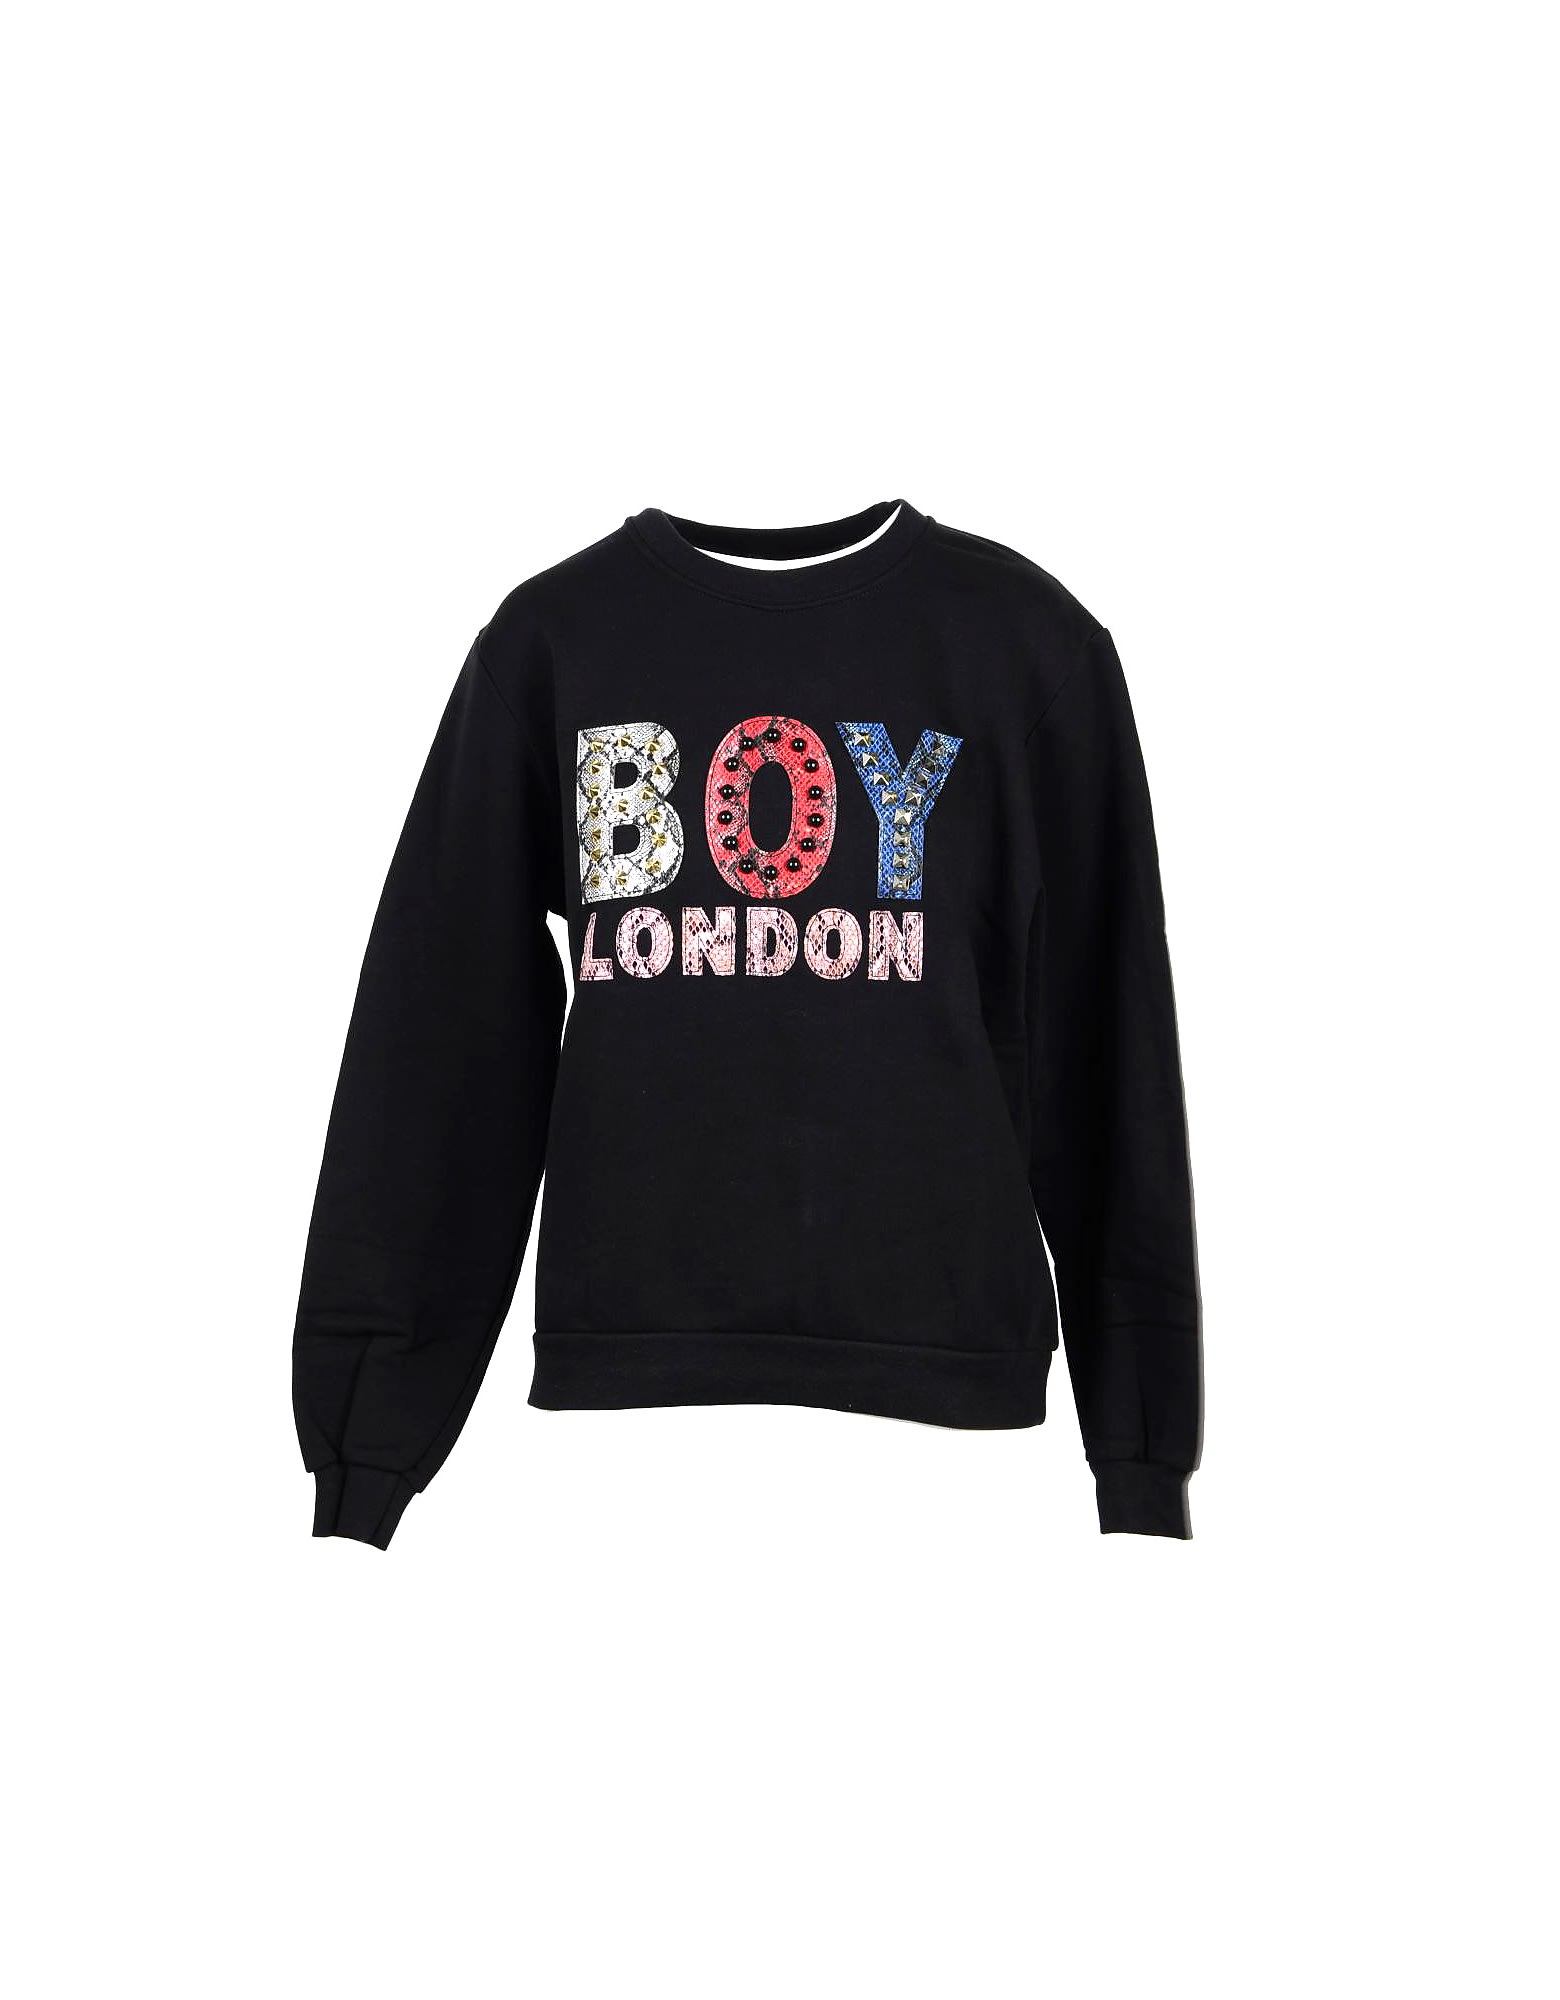 Boy London Black Cotton Womens Sweatshirt